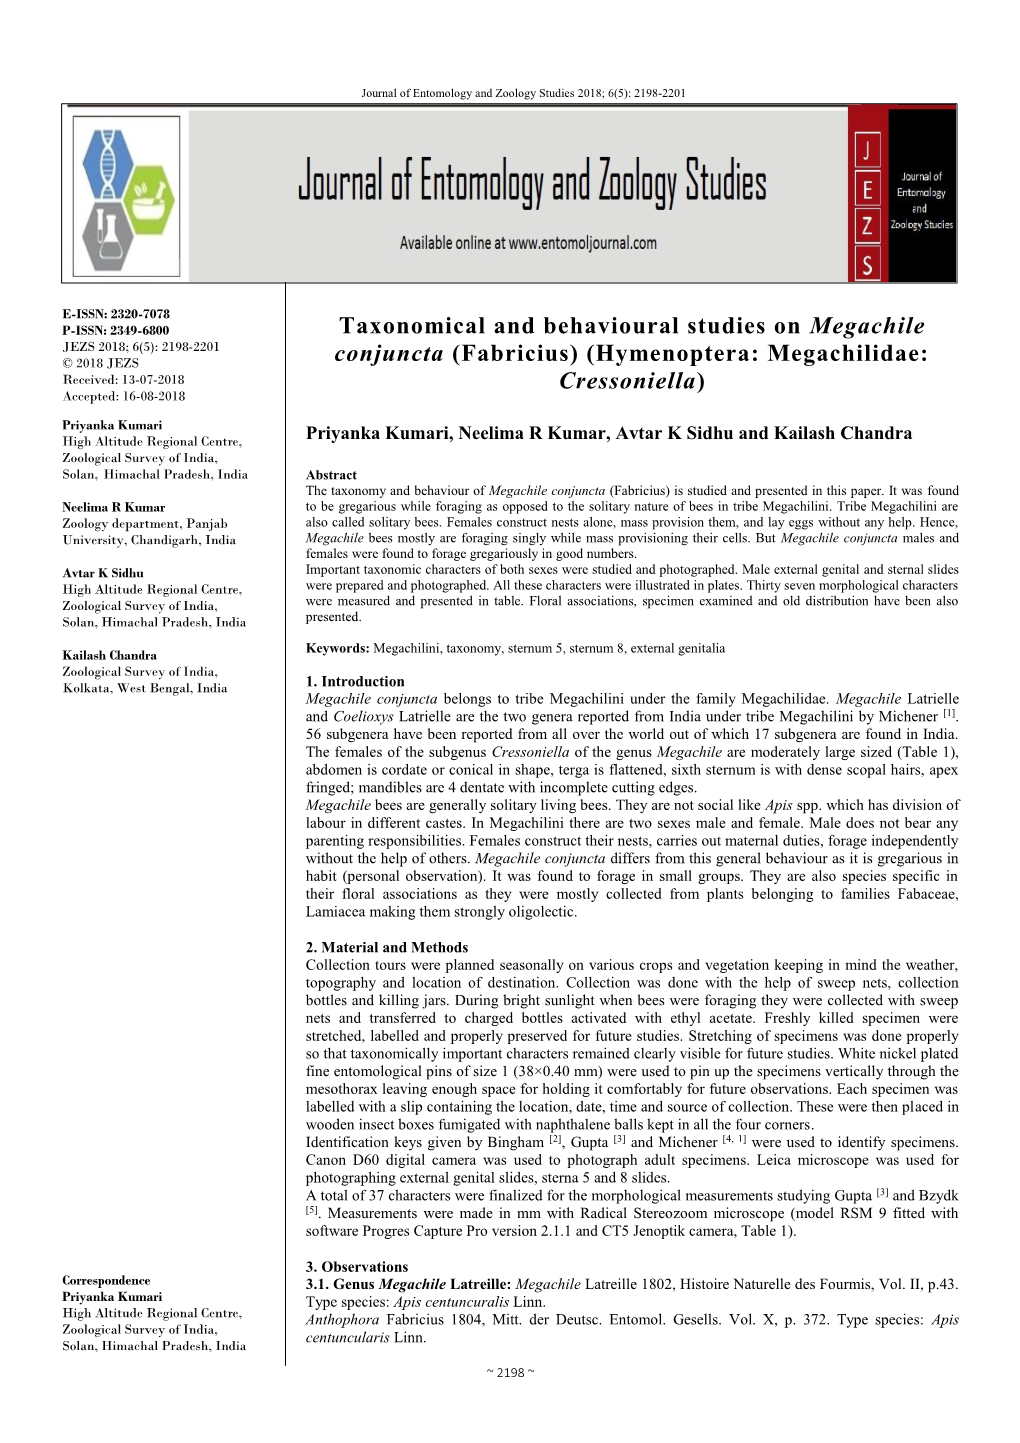 Taxonomical and Behavioural Studies on Megachile Conjuncta (Fabricius